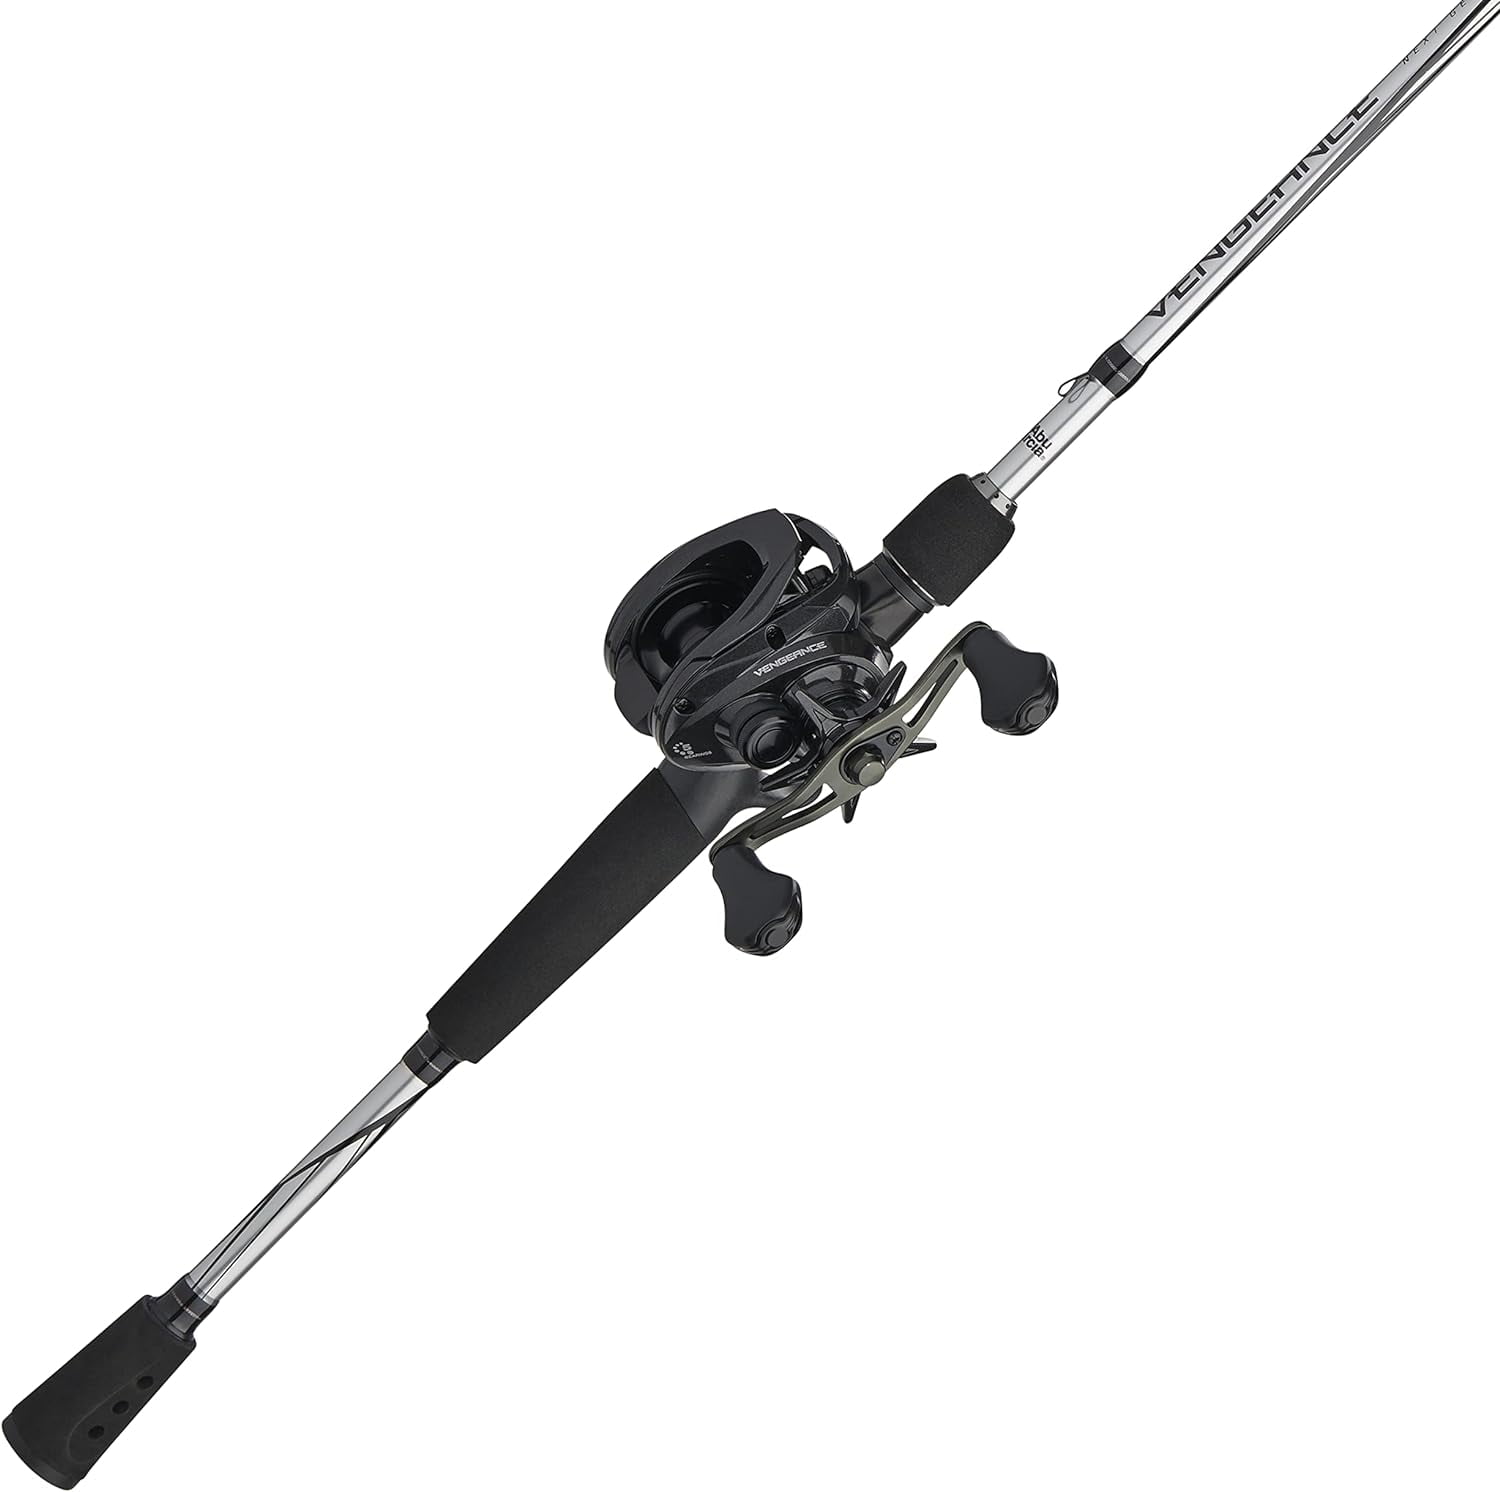 Vengeance Low Profile Baitcast Reel And Fishing Rod Combo - Walmart.com